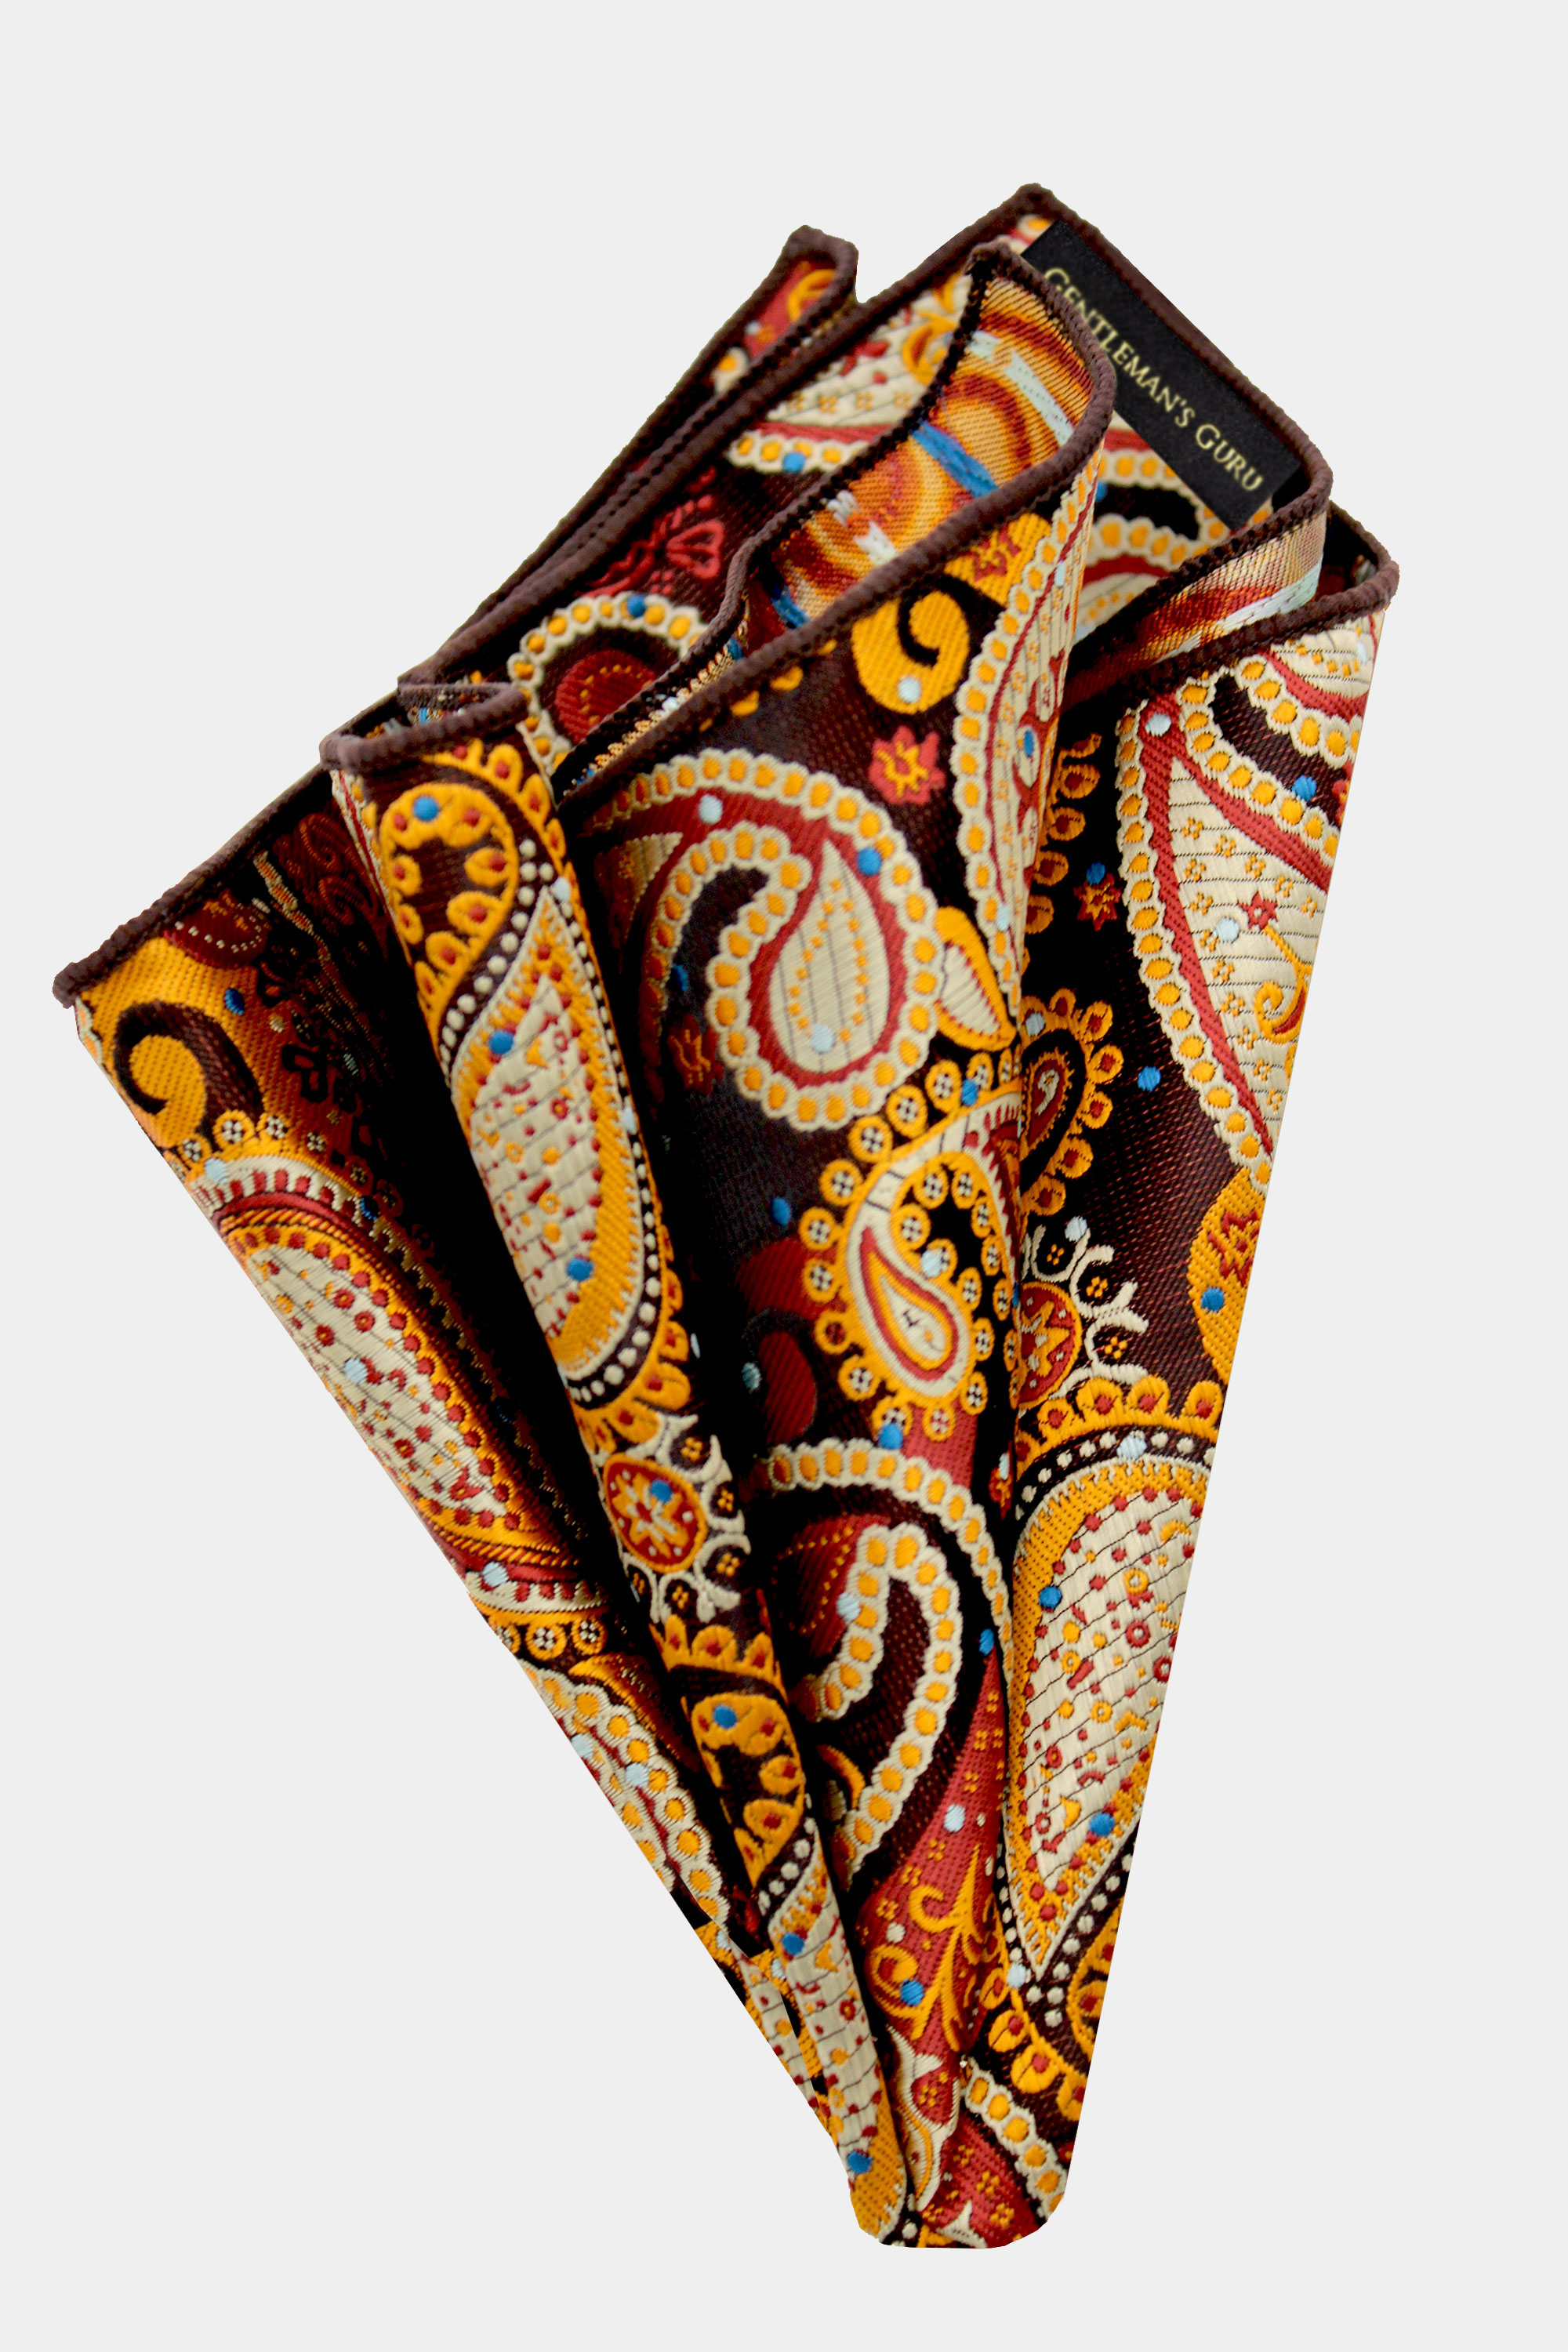 Burnt-Orange-Paisley-Pocket-Square-Handkerchief-from-Gentlemansguru.com_